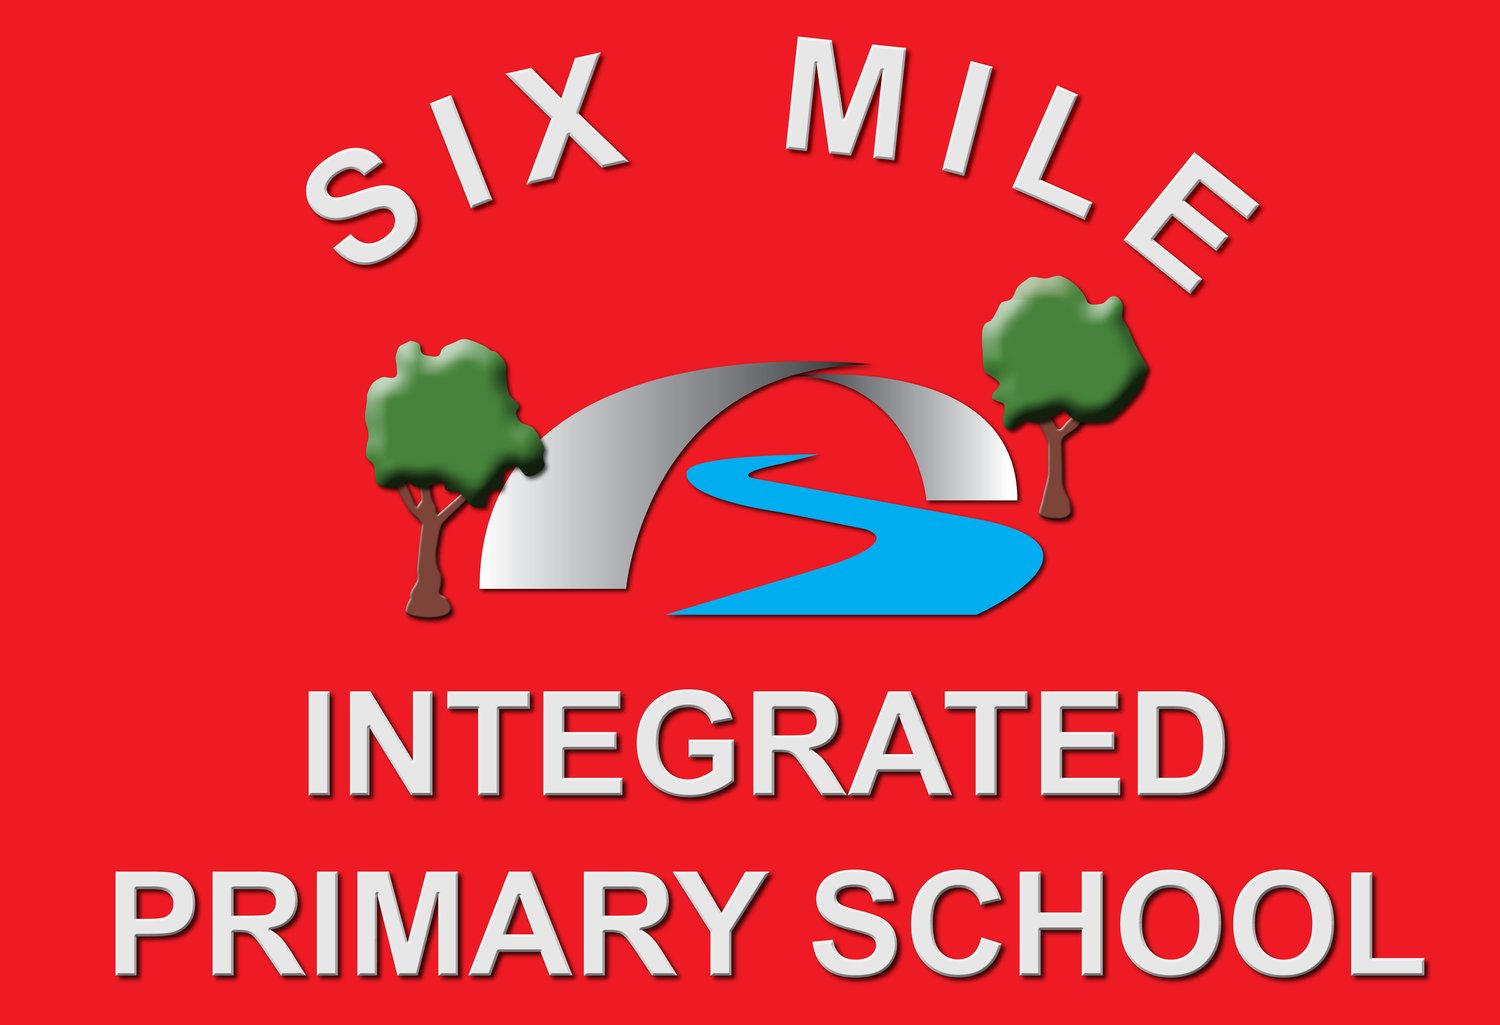 Six Mile Integrated Primary School